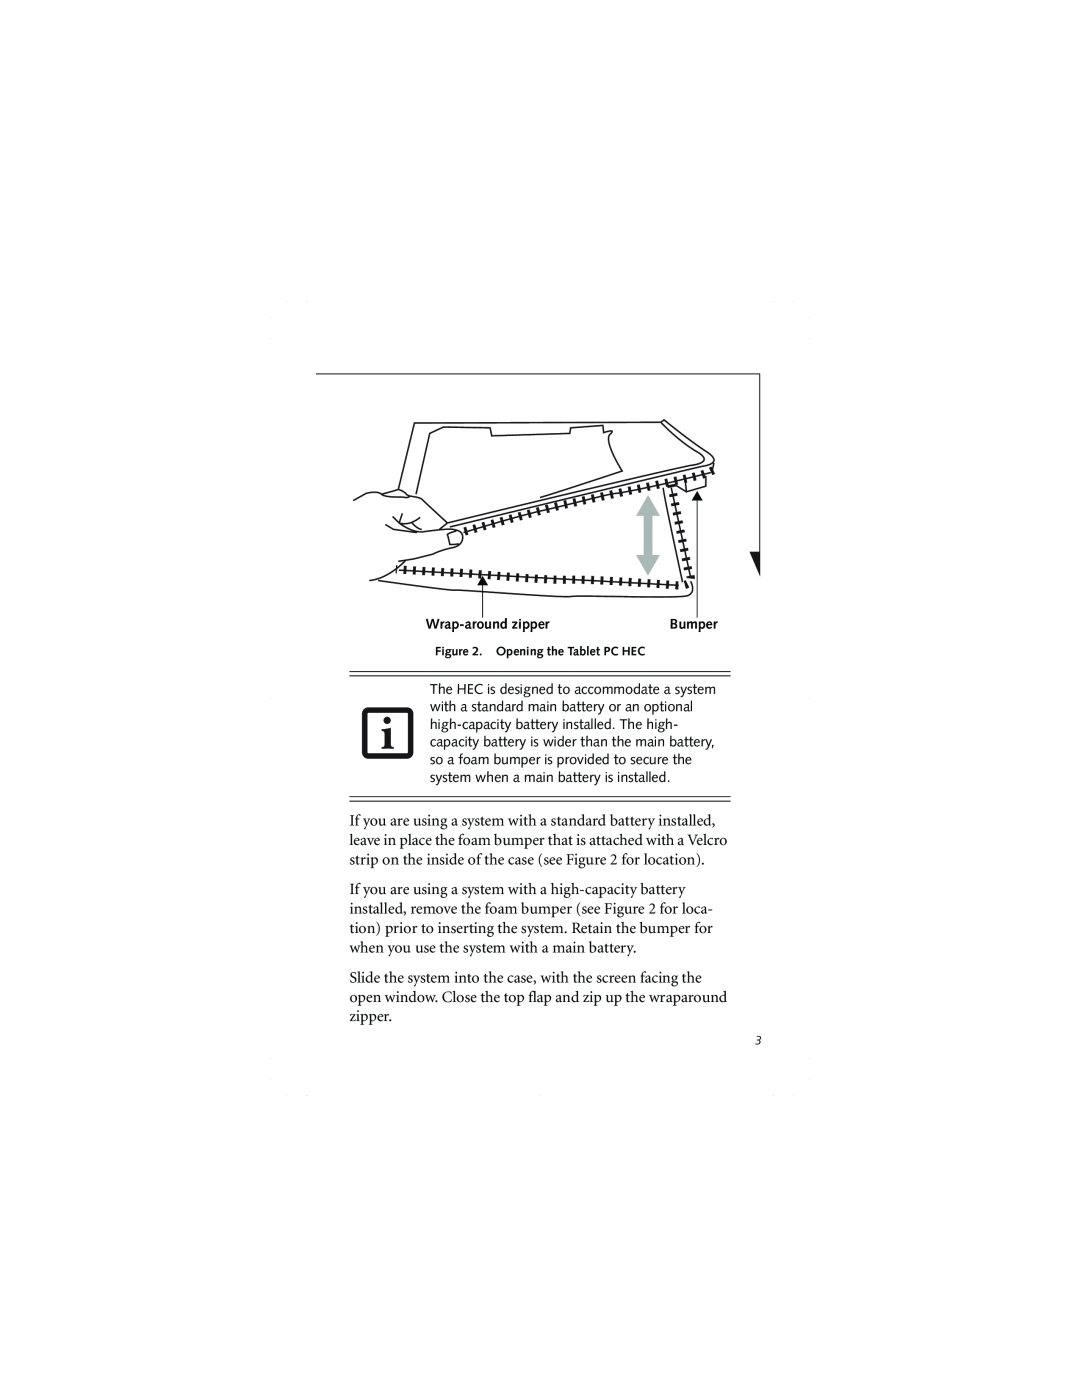 Fujitsu FPCCC48 manual Wrap-around zipper, Bumper, Opening the Tablet PC HEC 